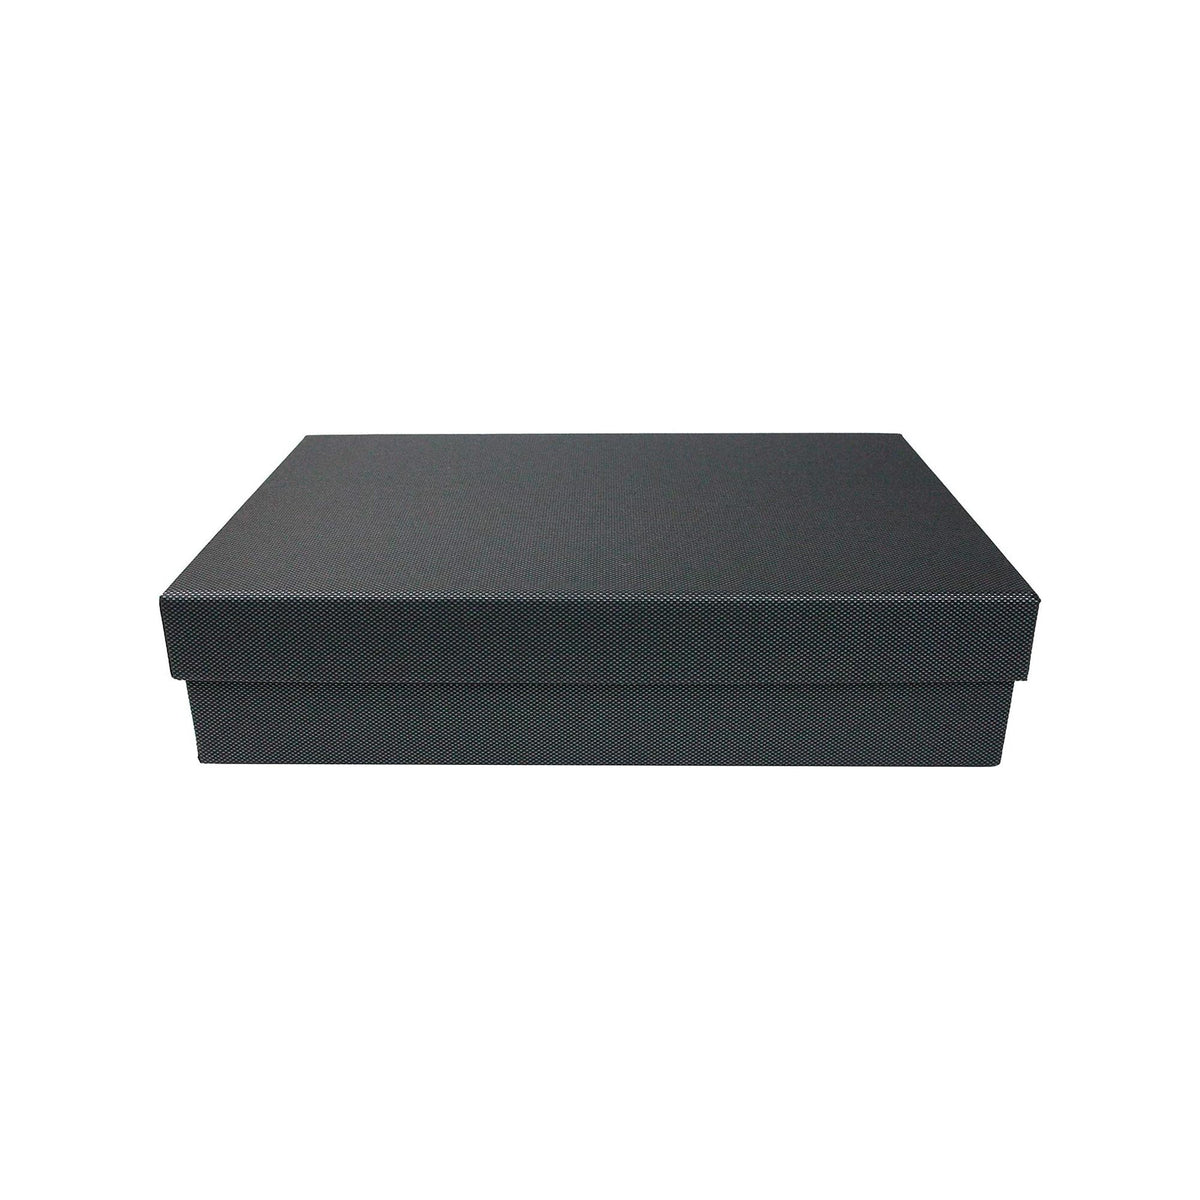 Single Textured Black Gift Box